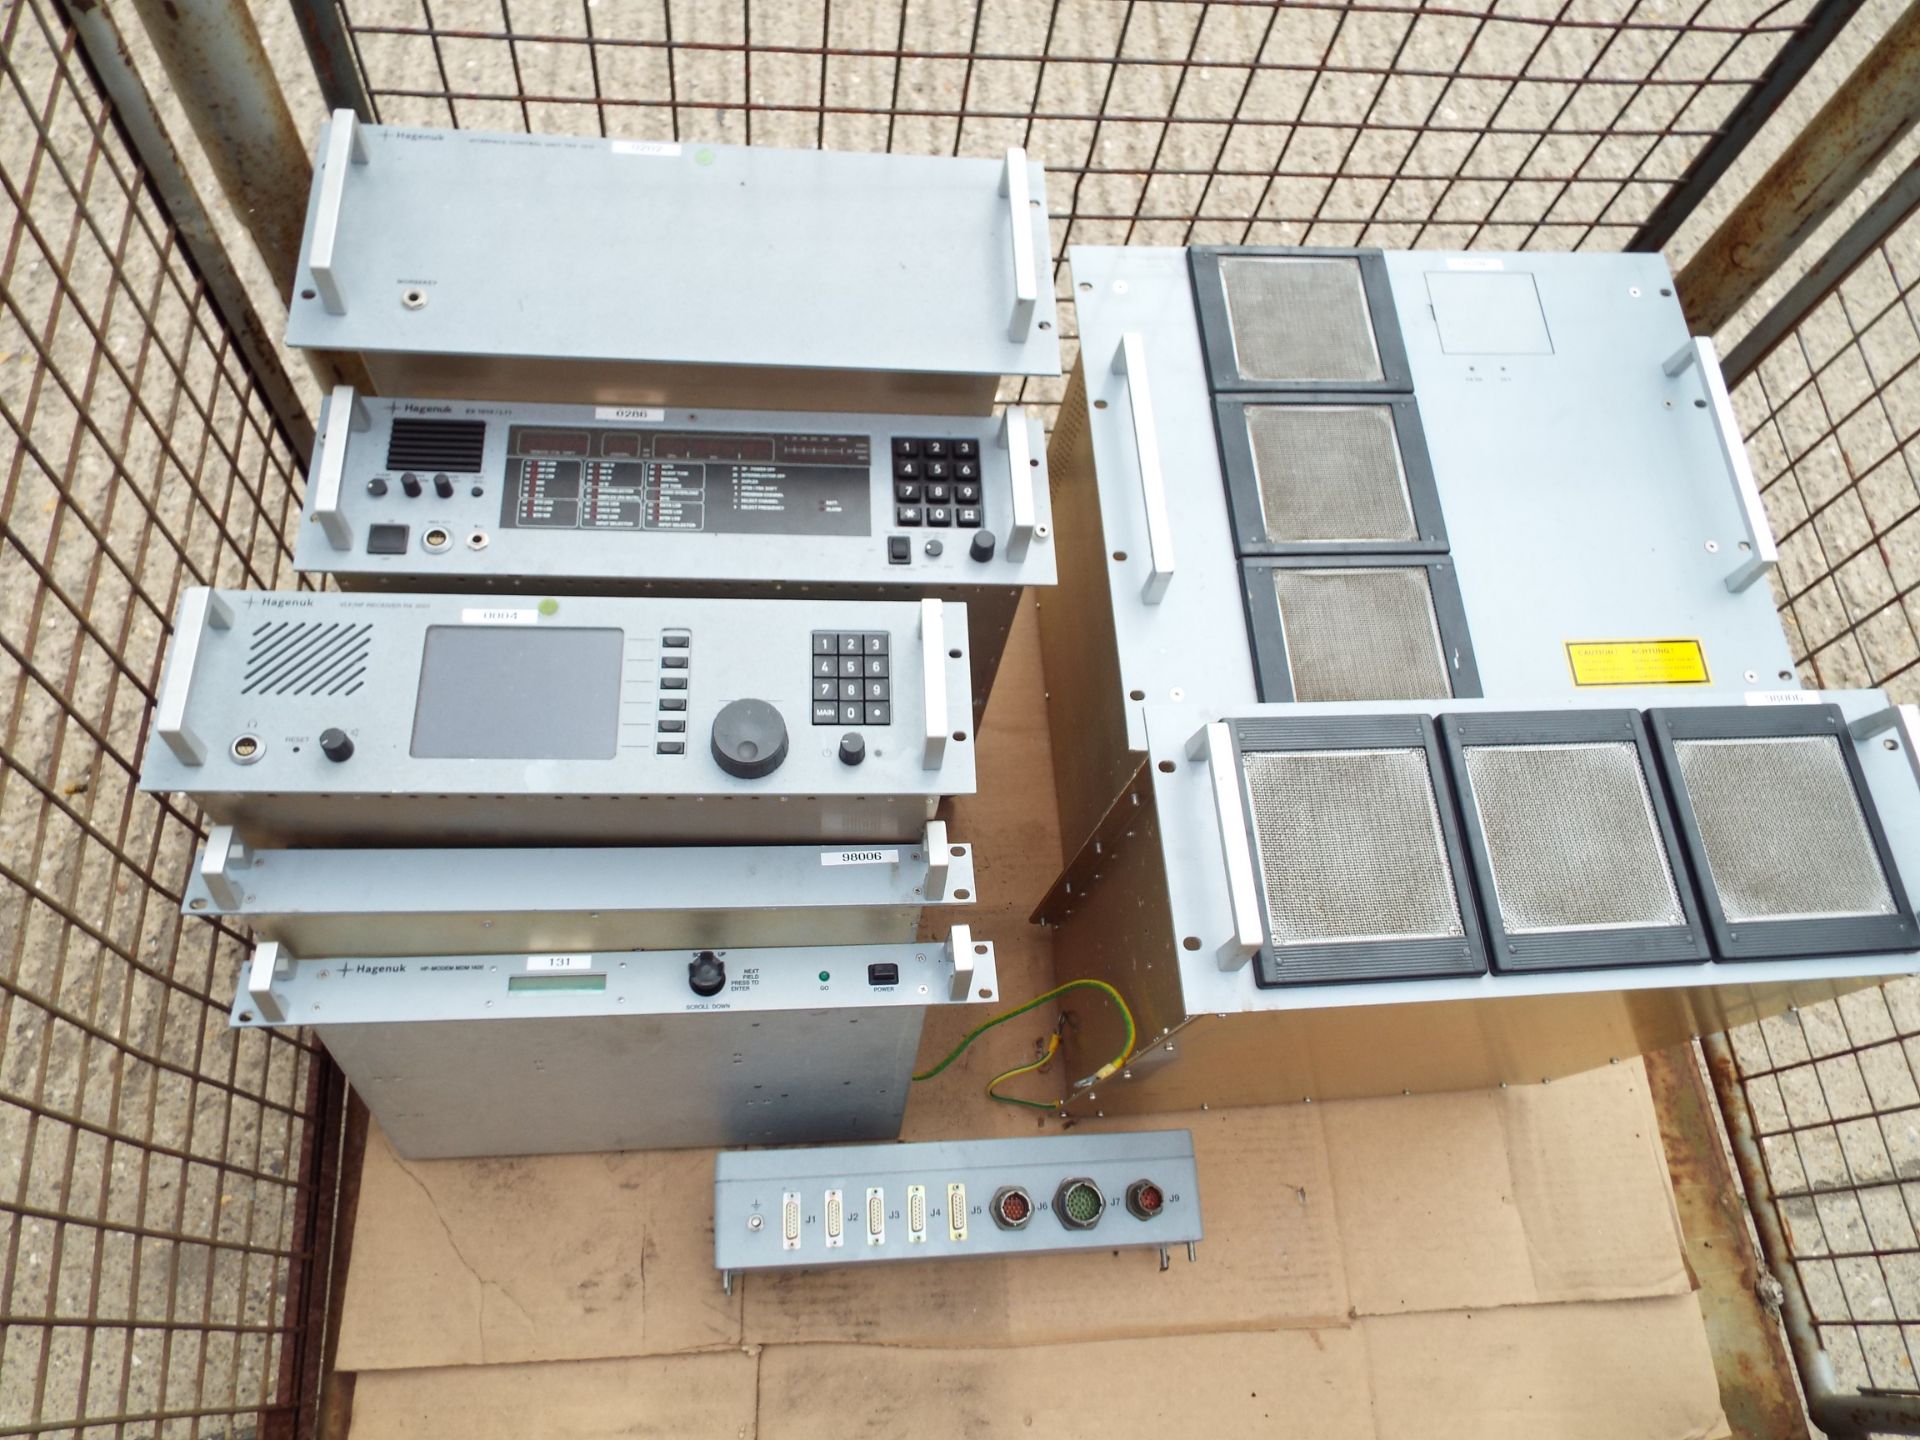 Mixed Stillage of Hagenuk Radio Equipment consisting of ICU, Transmitter, Receiver, Amplifier etc